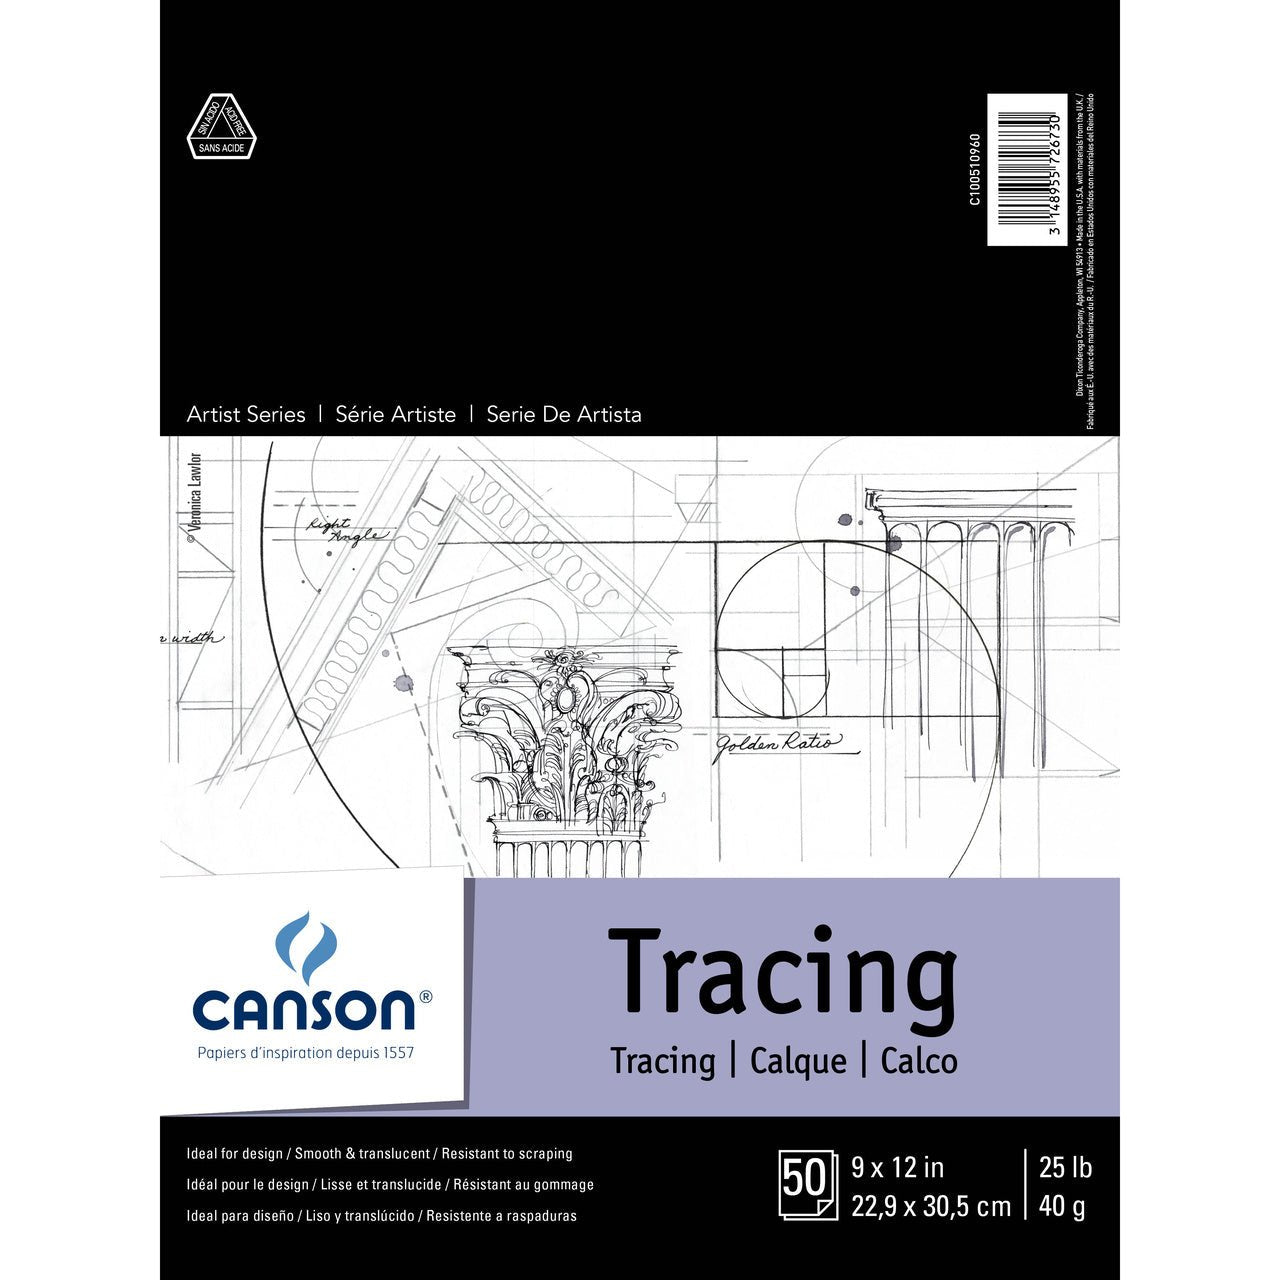 Canson Tracing Pad 25 lb - 50 Sheets 9X12 - merriartist.com